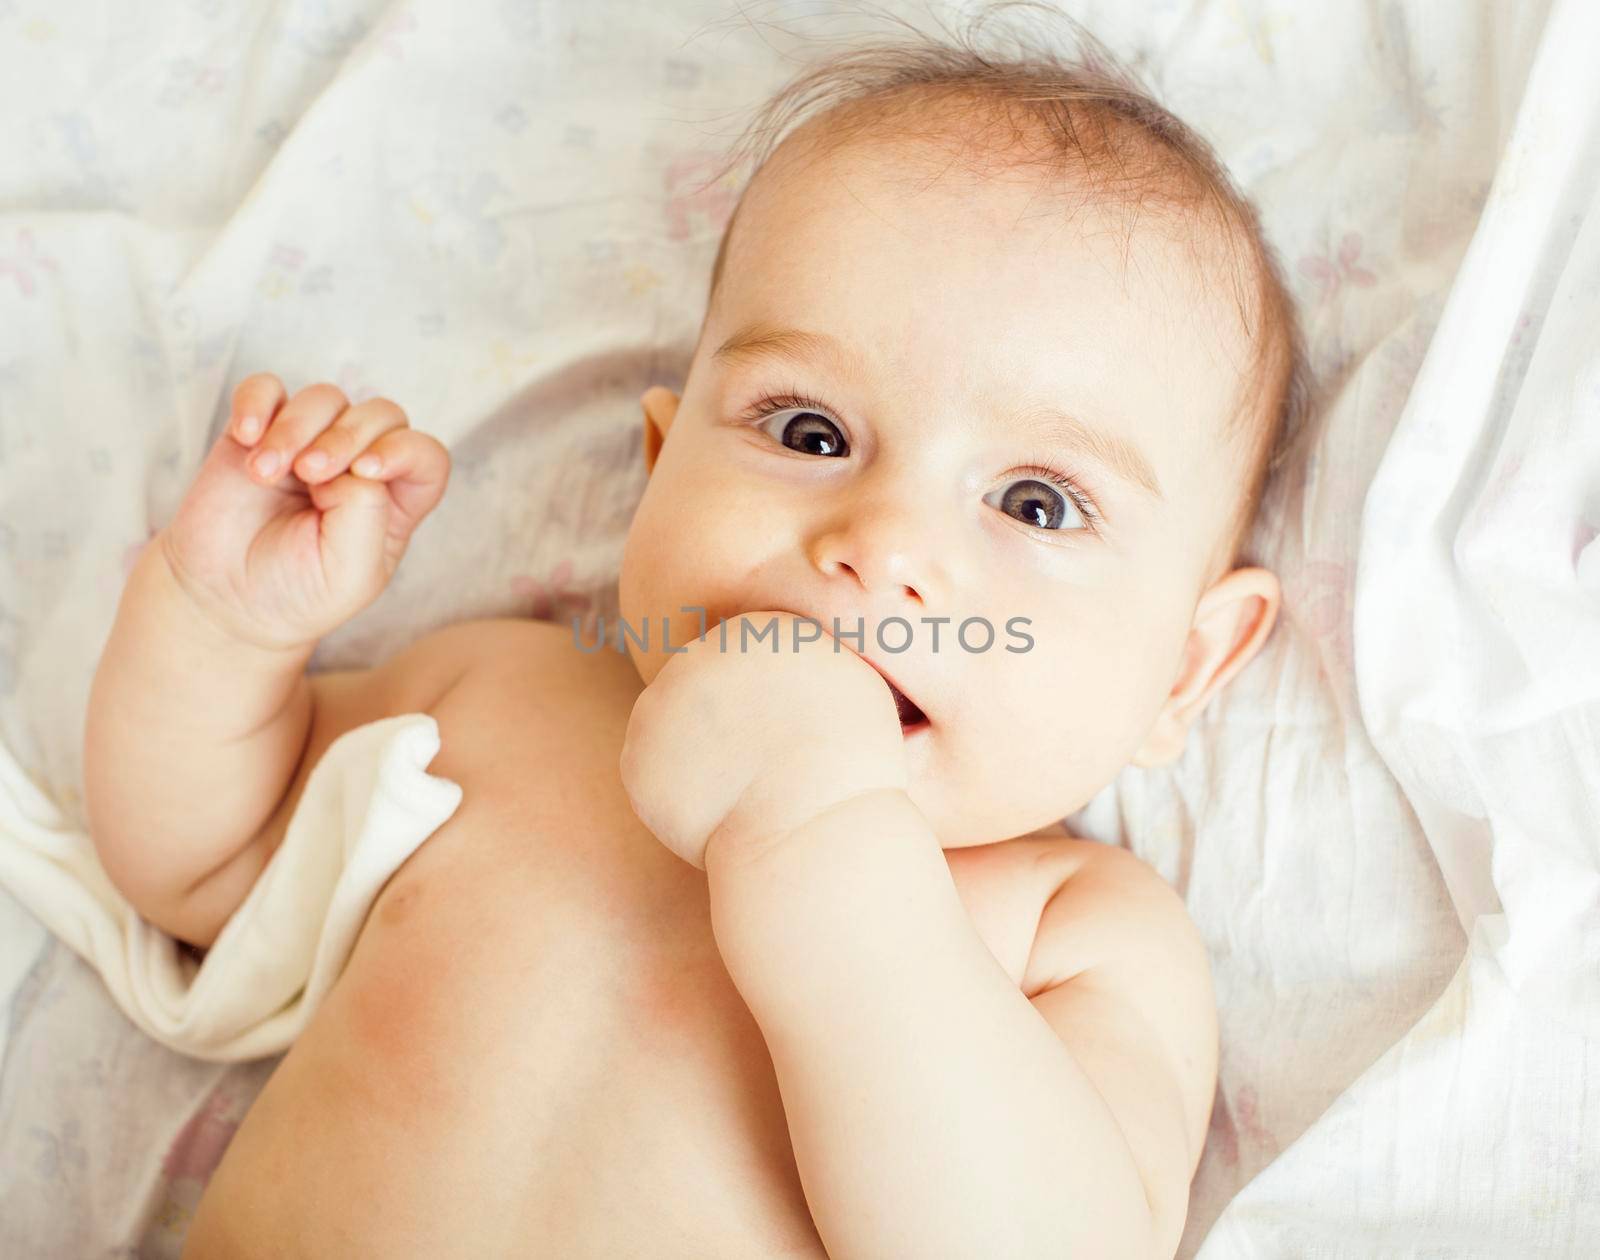 little cute baby toddler on carpet close up smiling, adorable kid by JordanJ